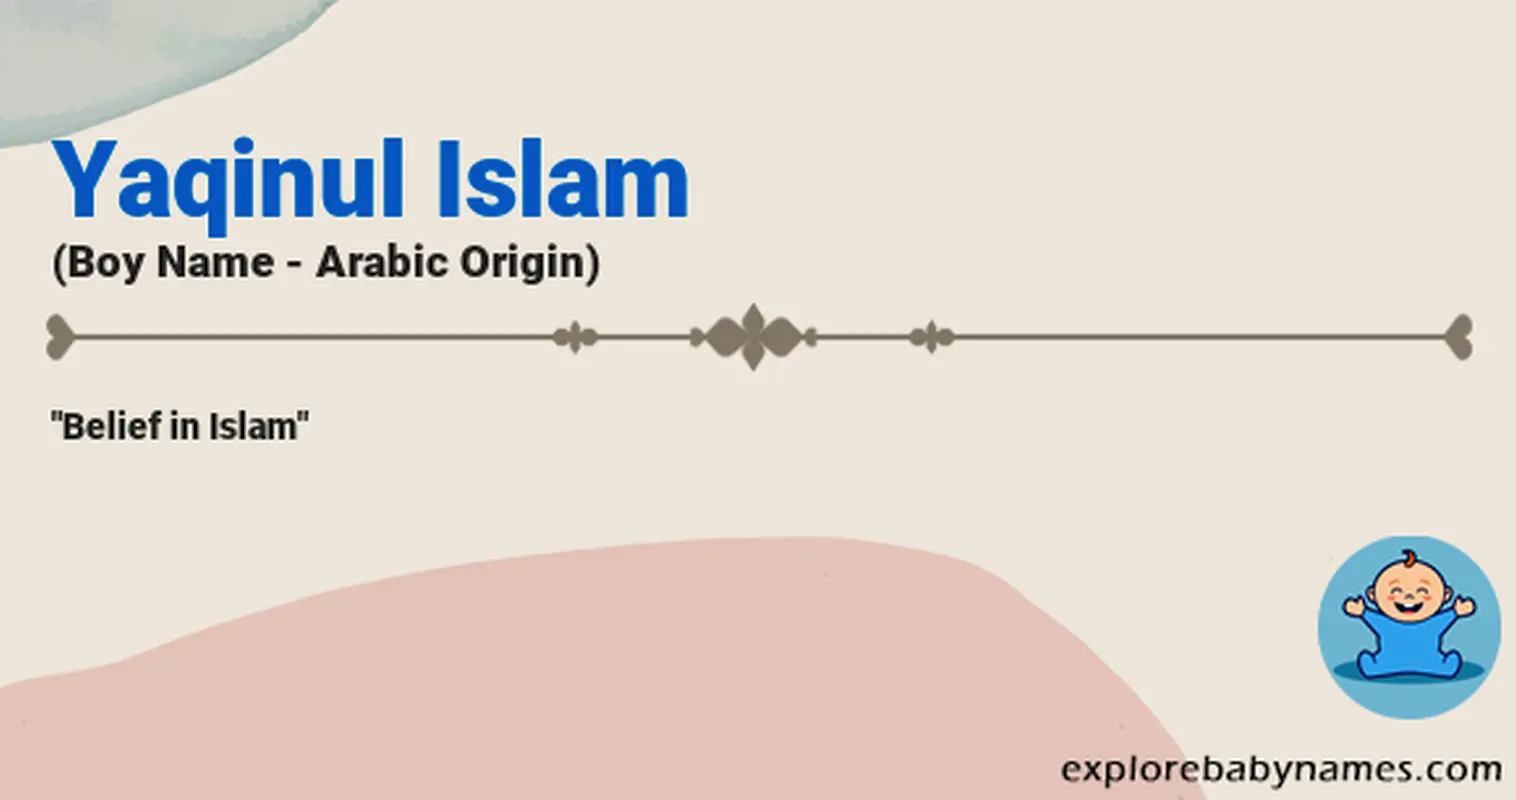 Meaning of Yaqinul Islam